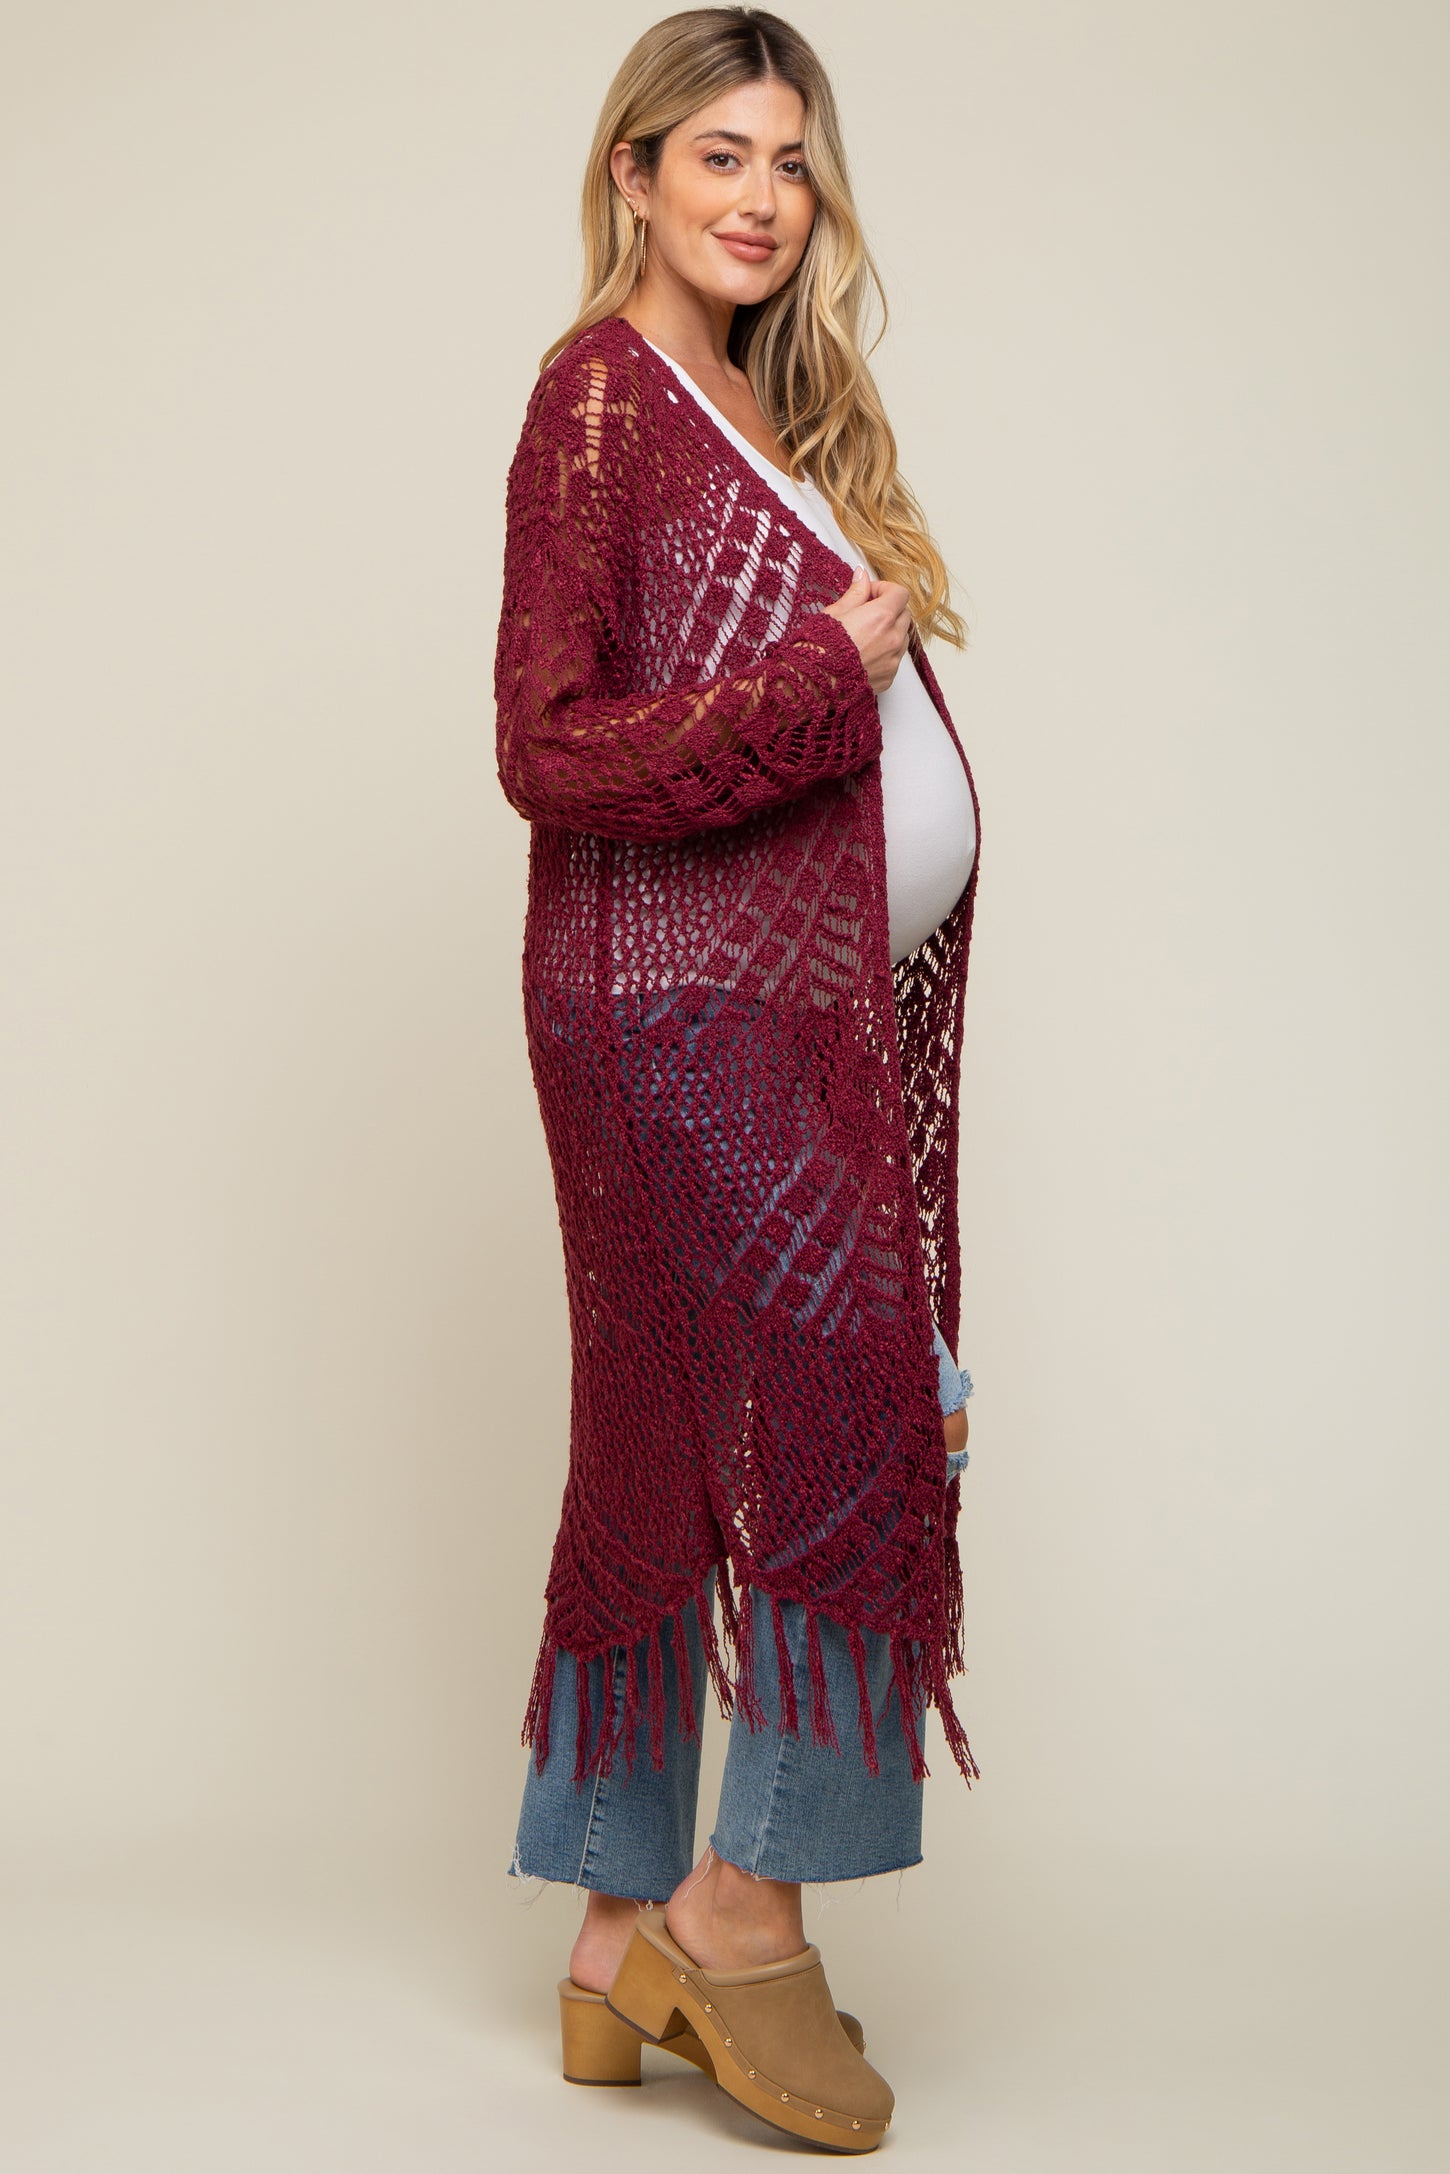 Burgundy Crochet Fringe Hem Maternity Cardigan